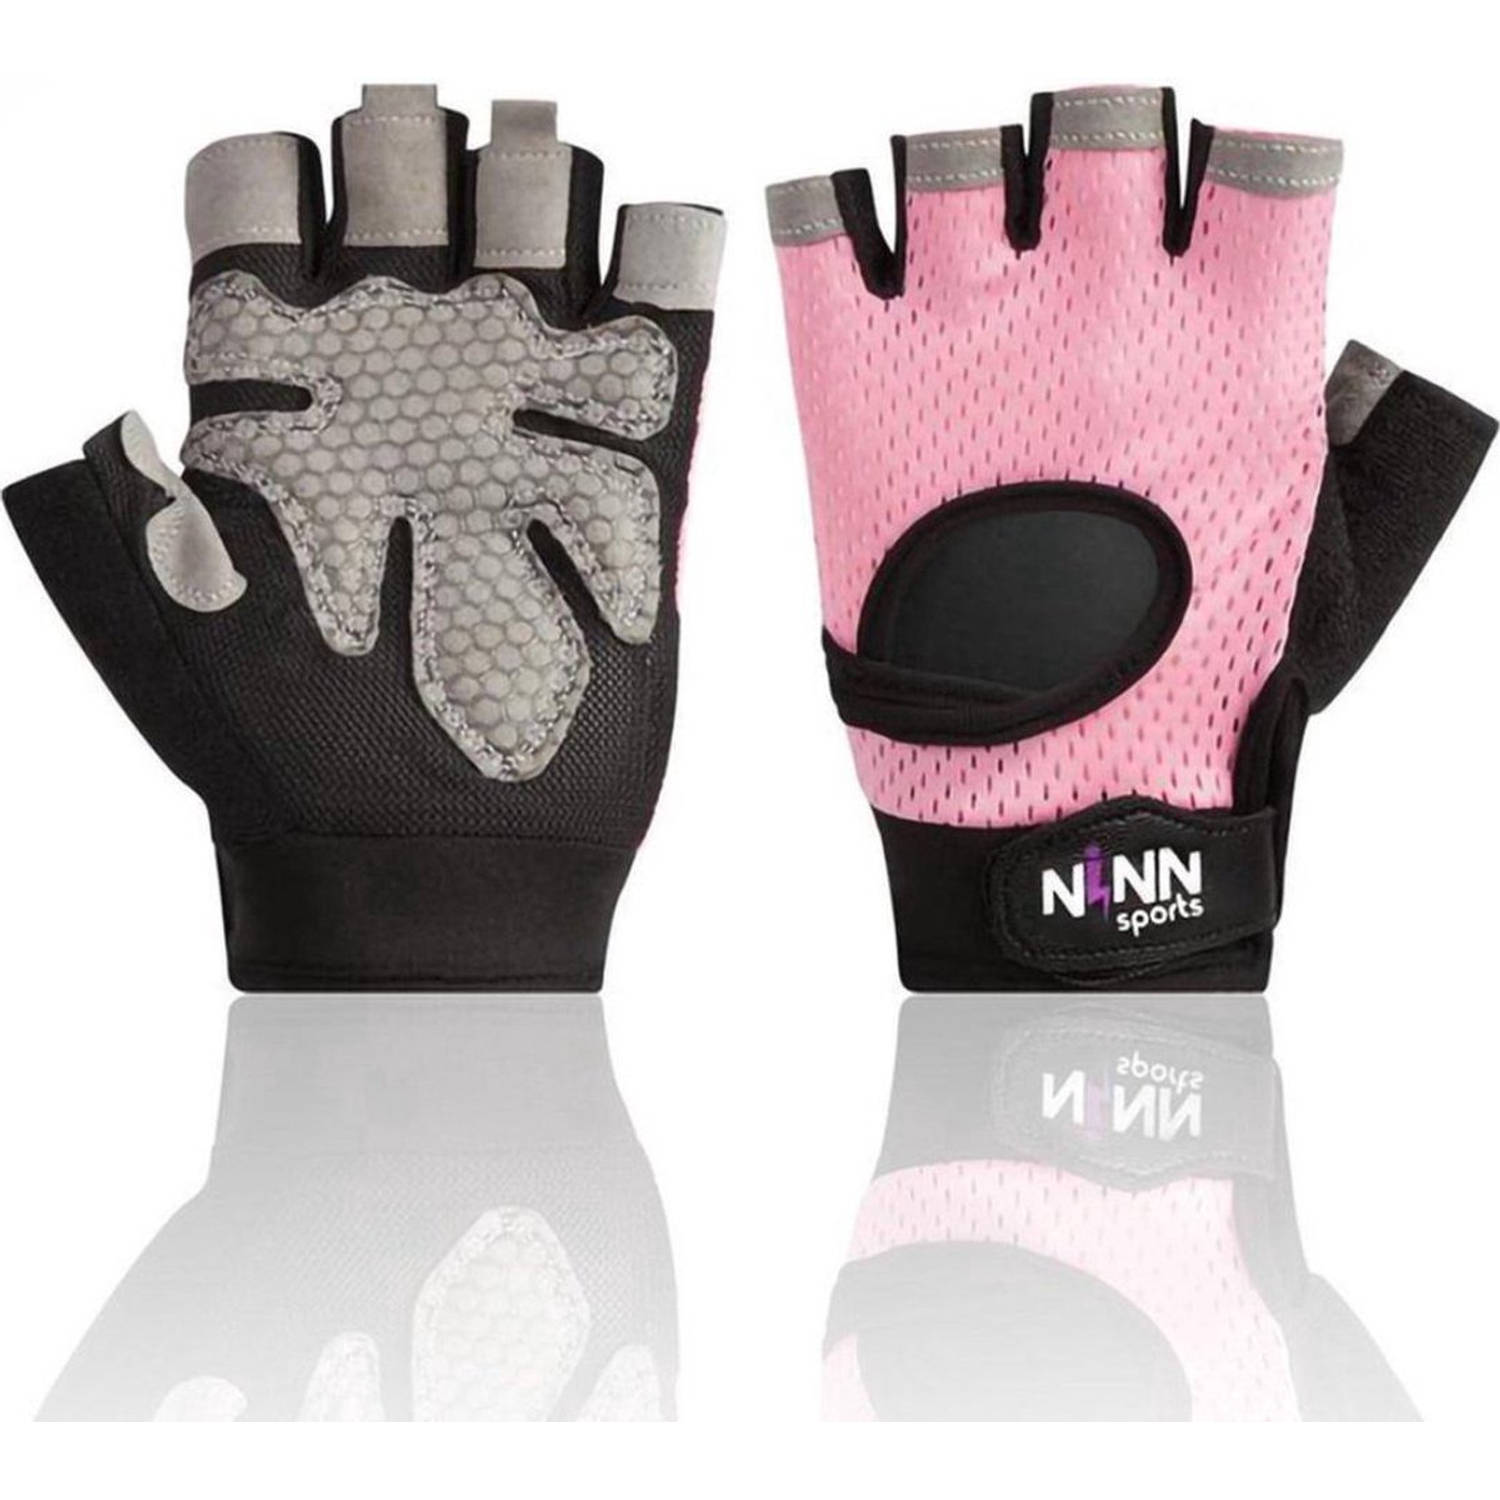 NINN Sports Lady gloves L (Roze) - Dames fitness handschoenen - Sport handschoenen dames - Grip Gloves - Fitnesshandschoenen Vrouwen